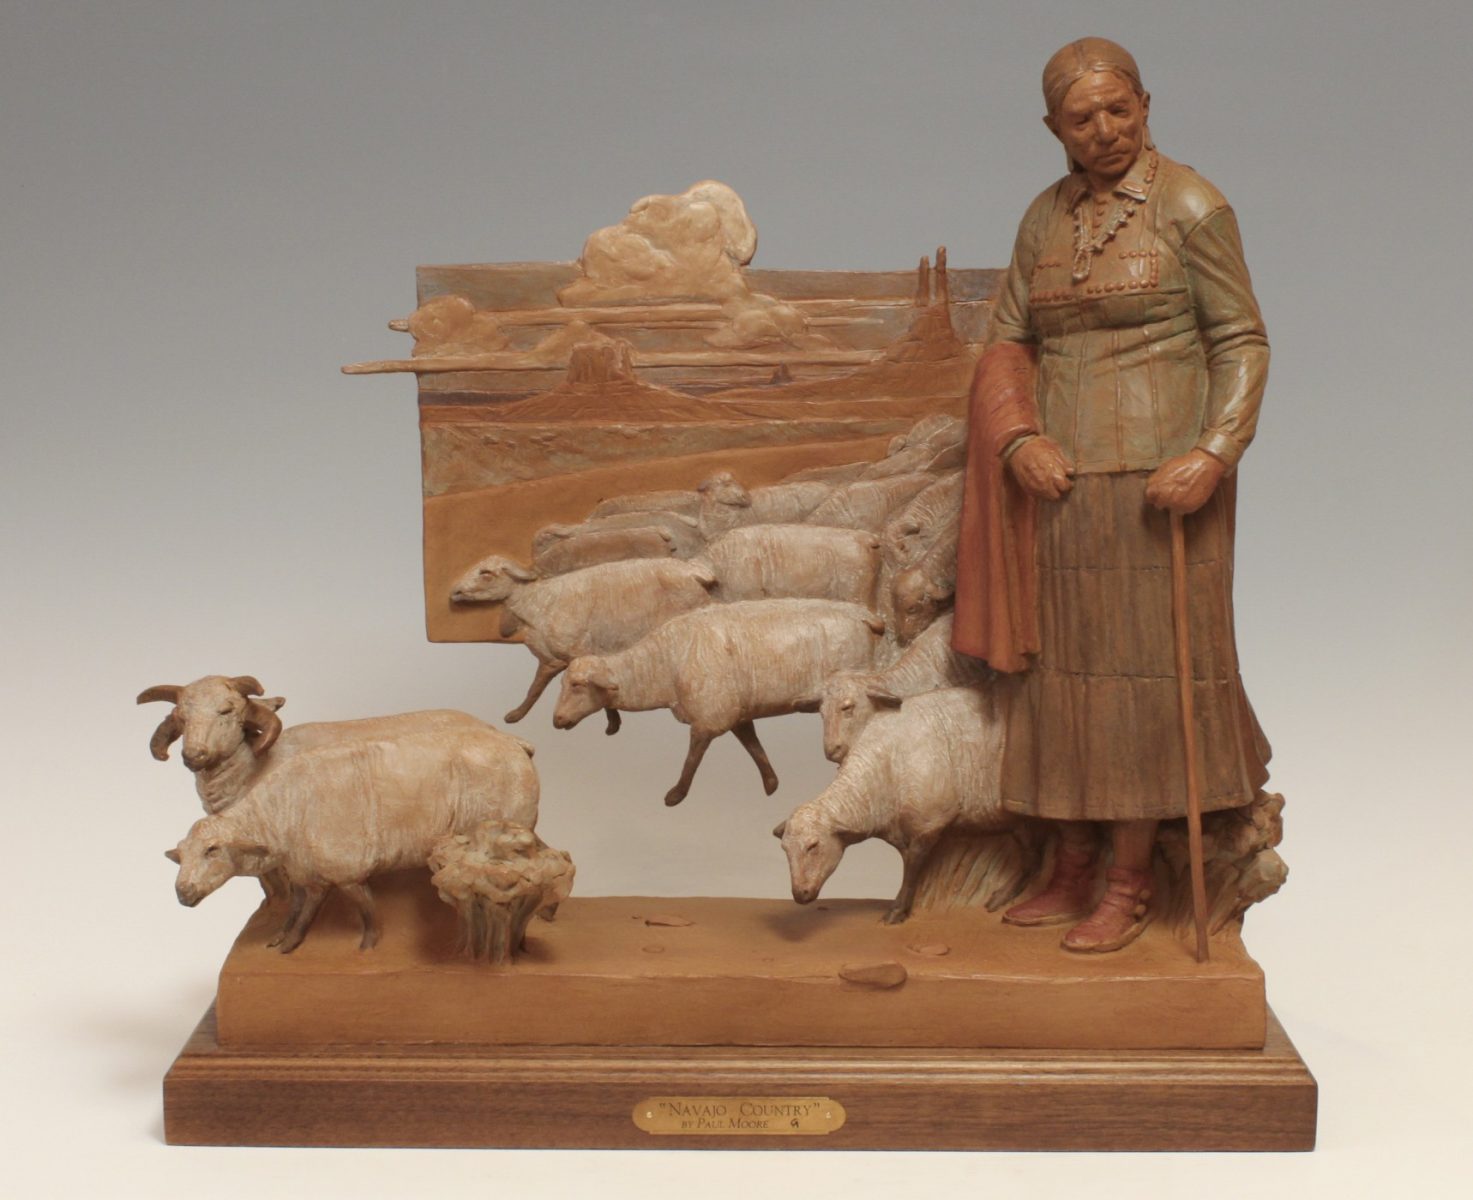 Bronze sculpture of Navajo woman herding sheep by Paul Moore